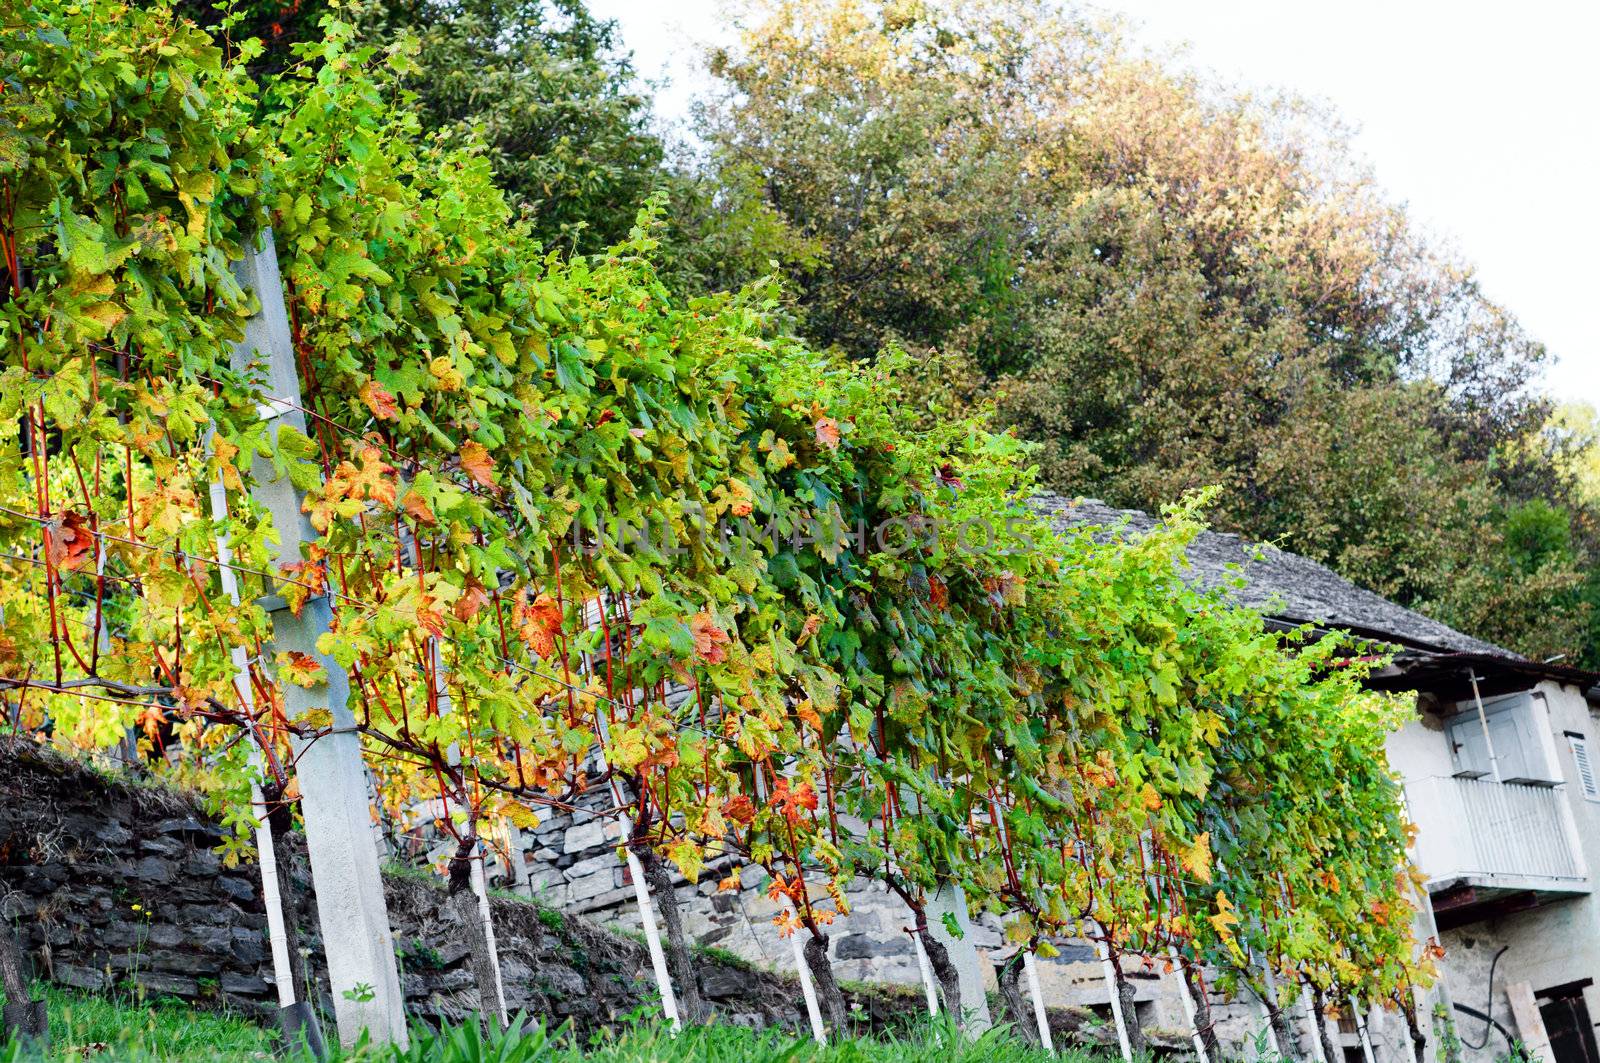 Vineyard turning yellow red in autumn by rmarinello